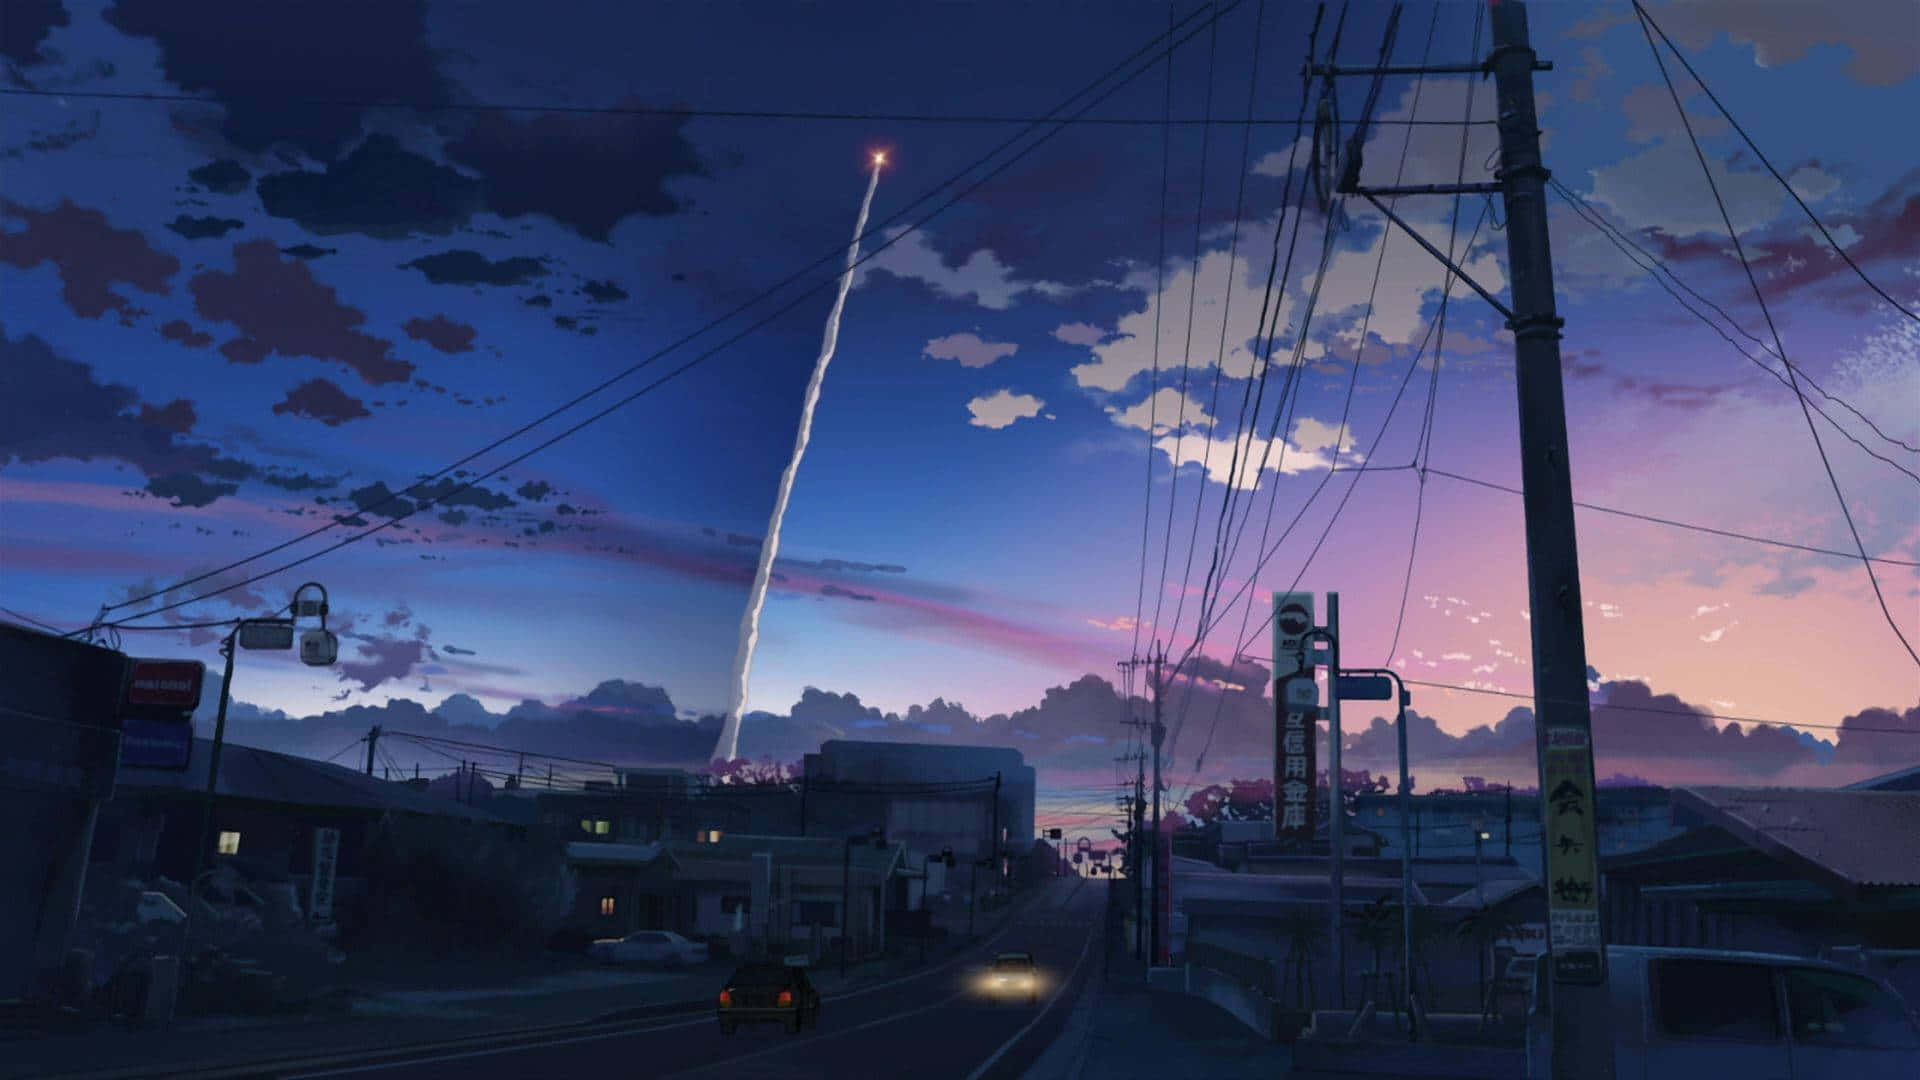 Dark Aesthetic Anime City Picture